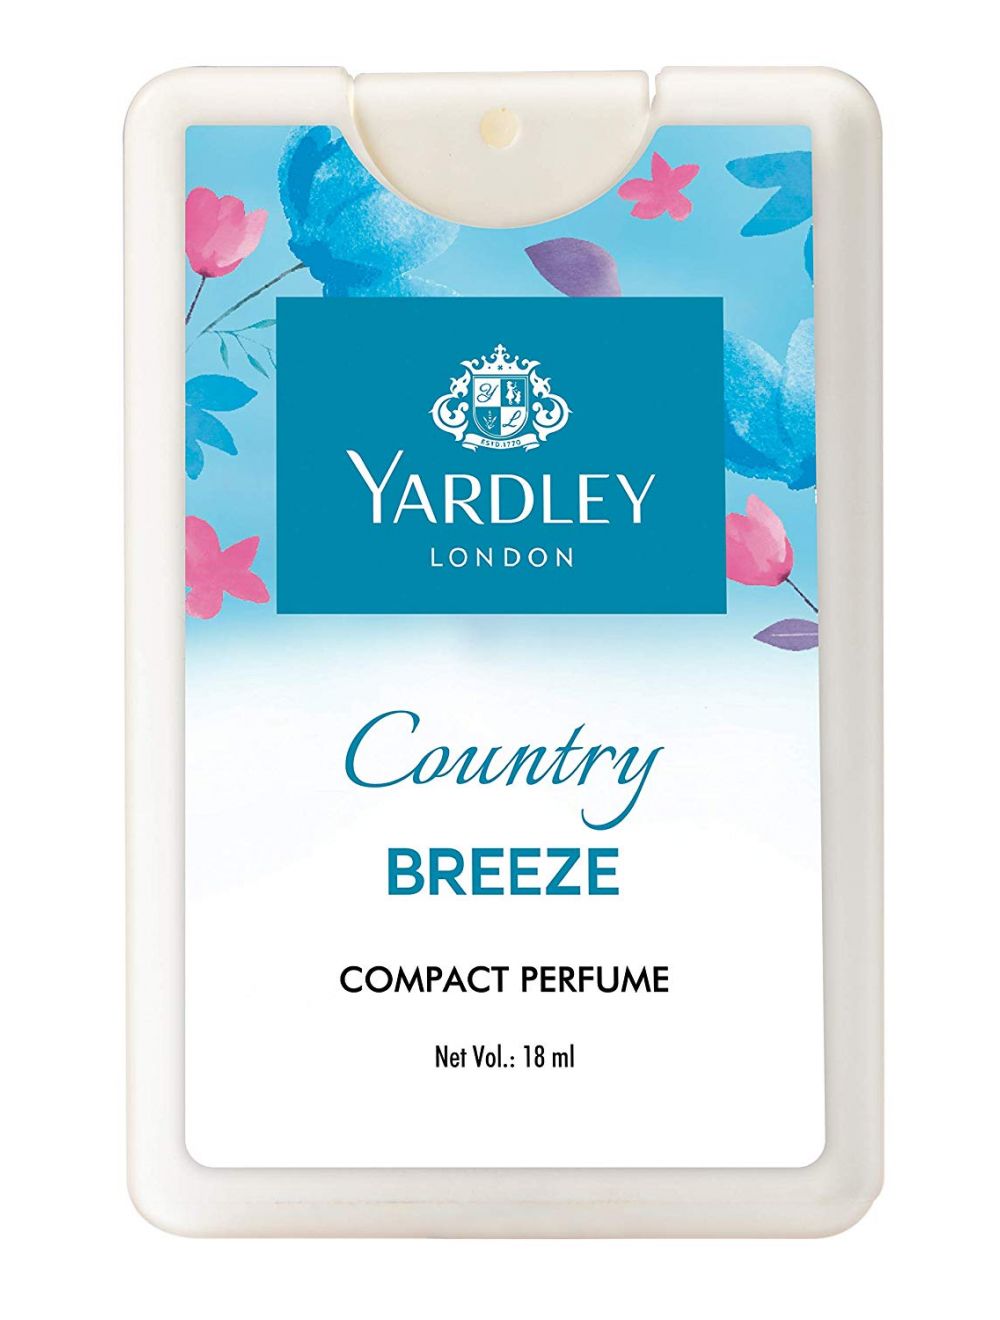 Yardley London Country Breeze Compact Perfume (18ml) - Niram